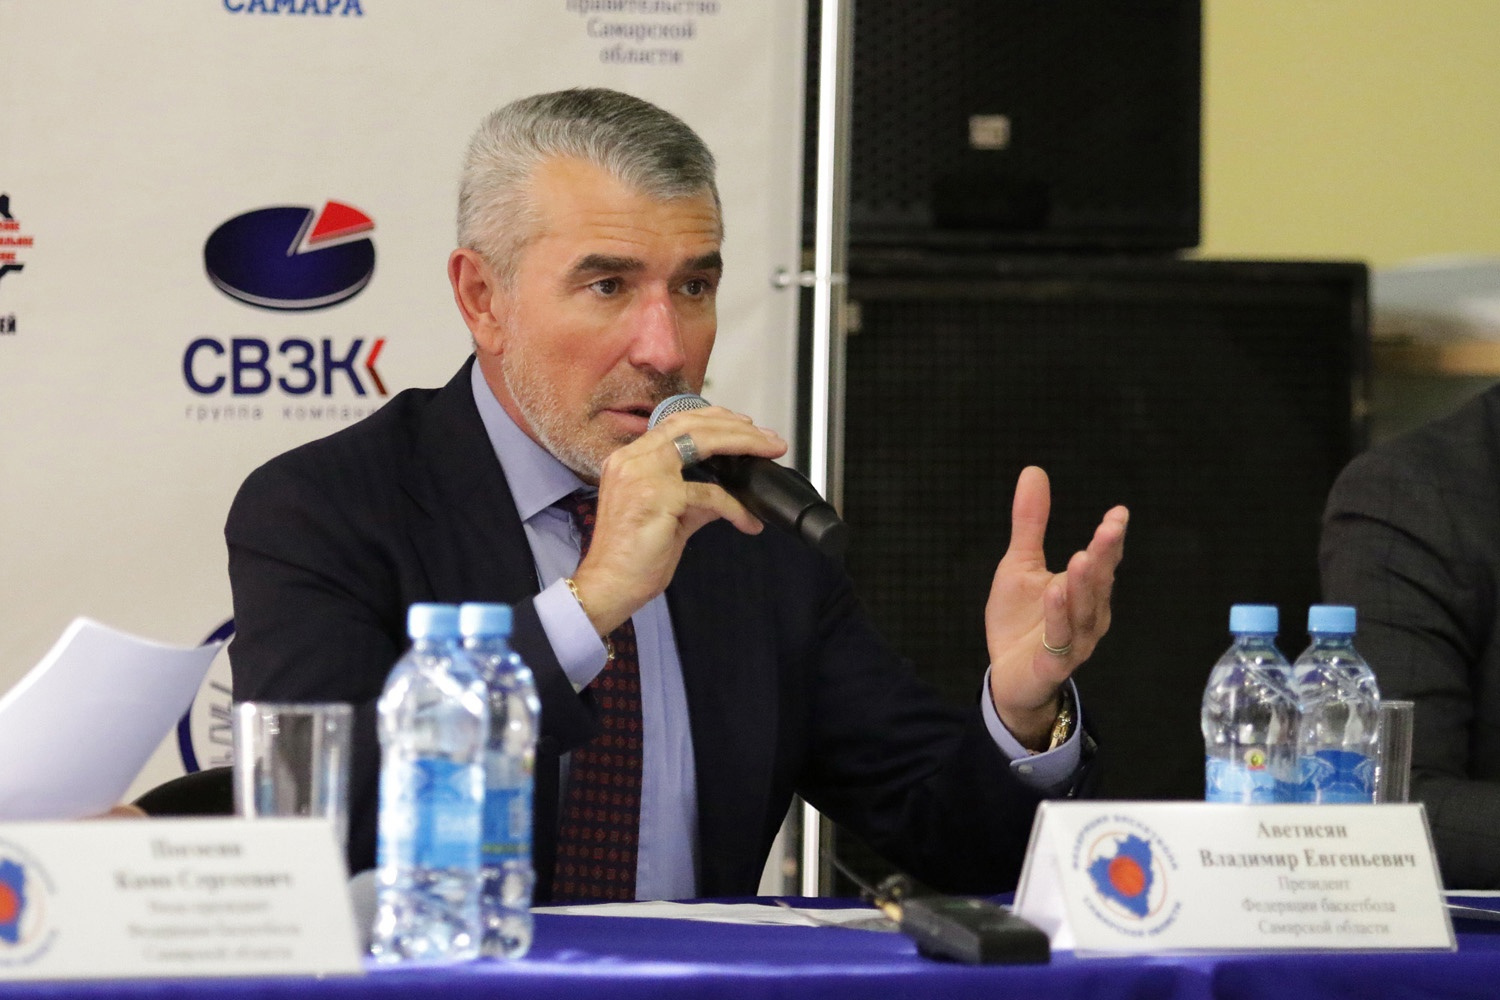 Также Владимир Аветисян возглавляет федерацию баскетбола Самарской области